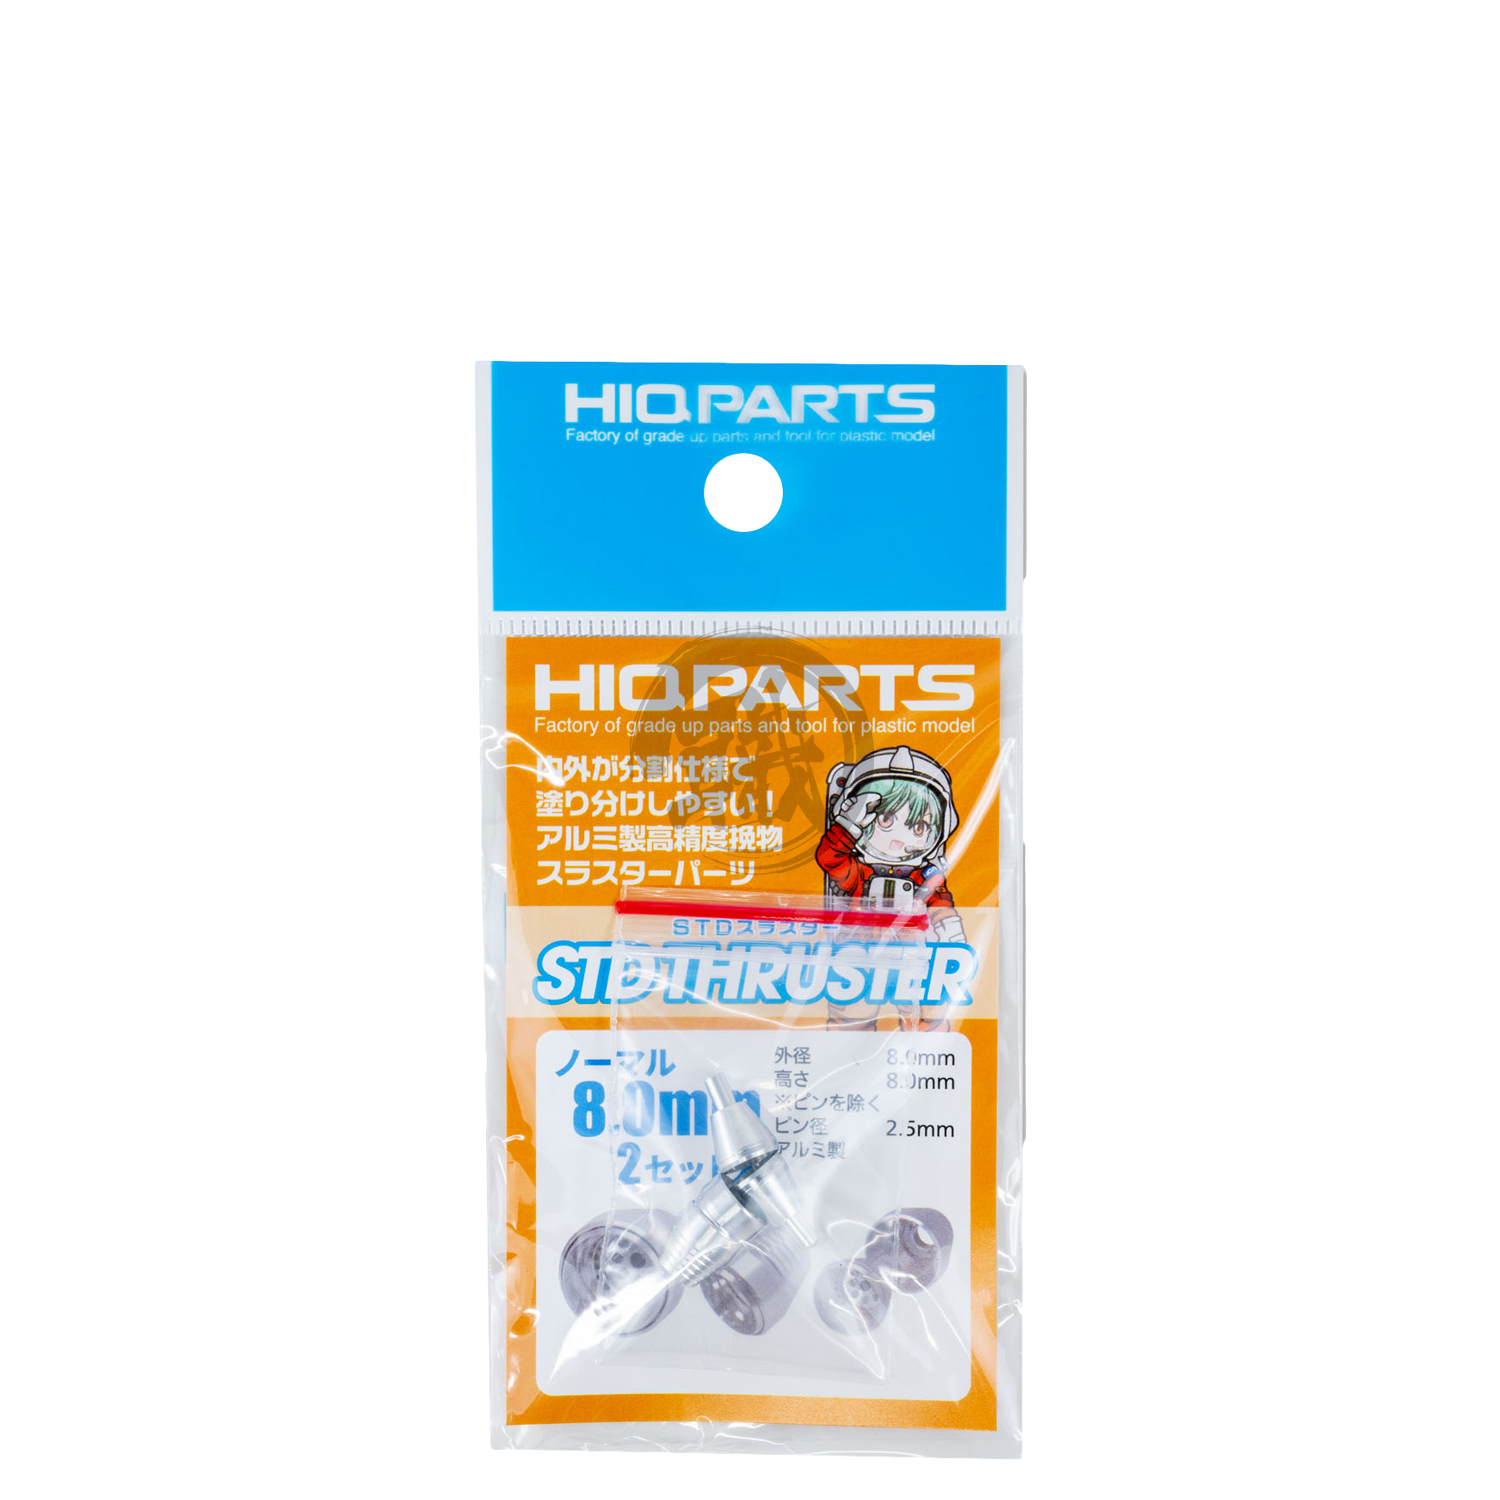 HIQParts - STD Thruster - Normal [8.0mm] - ShokuninGunpla